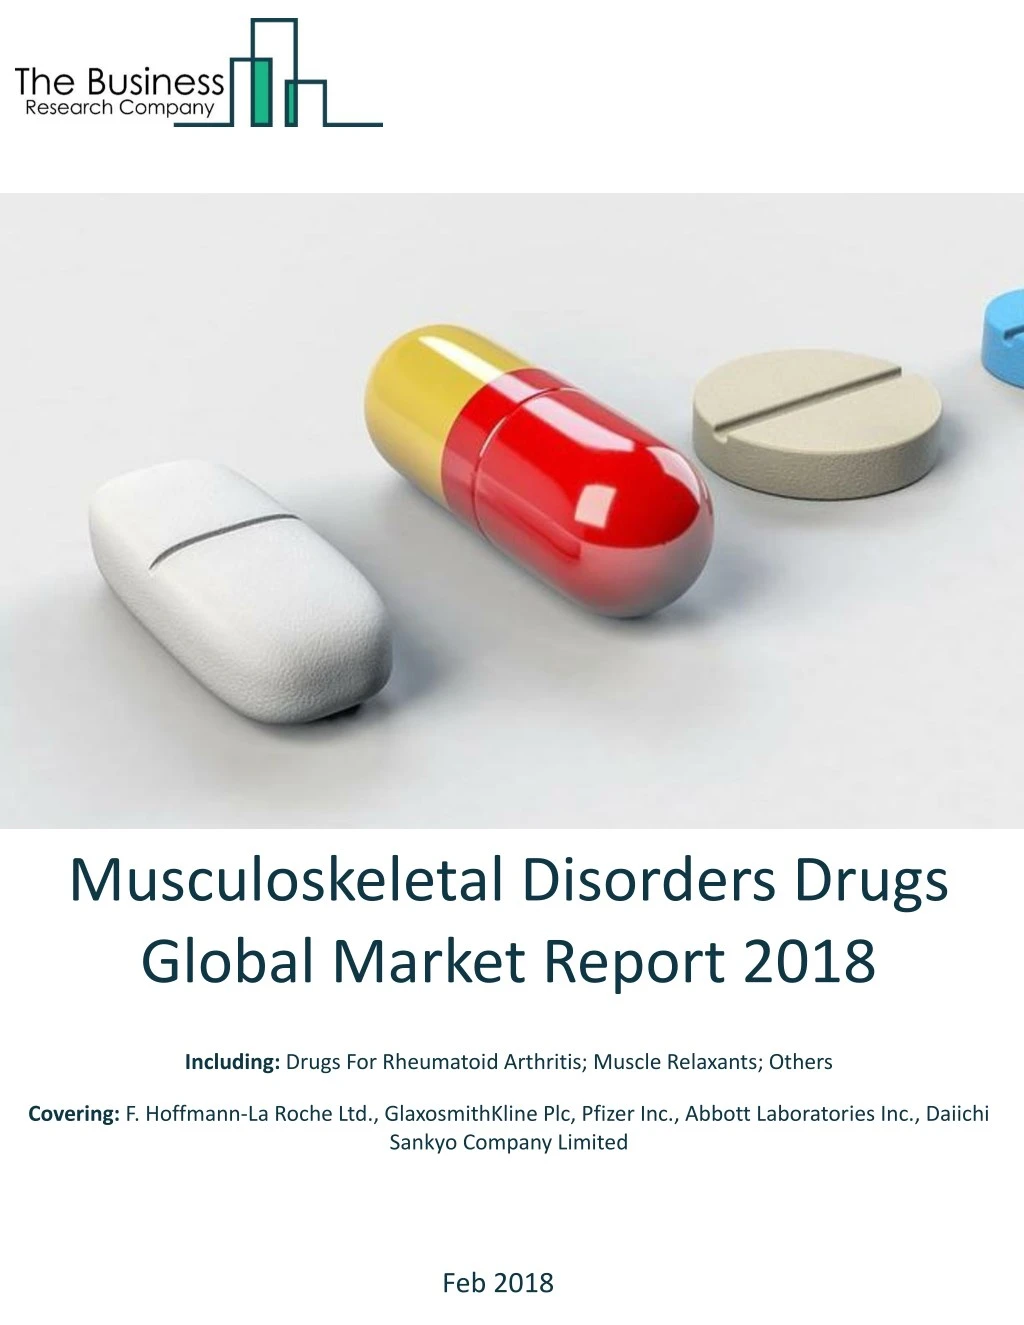 musculoskeletal disorders drugs global market